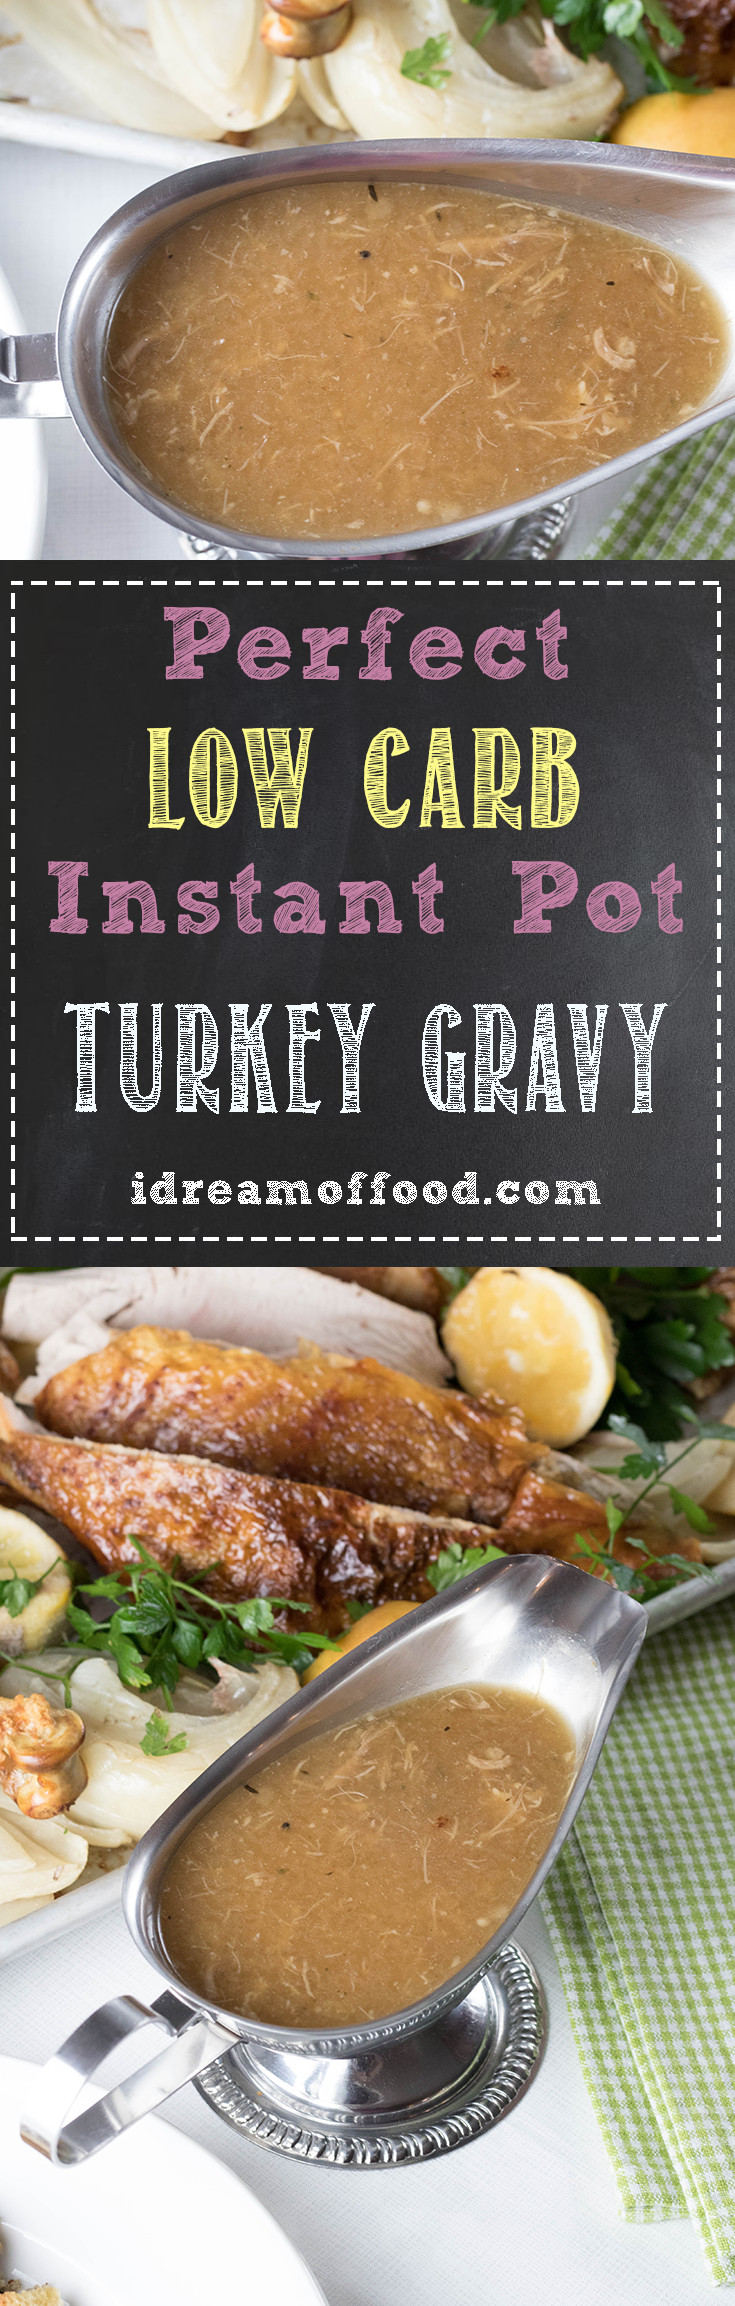 Low Carb Turkey Gravy
 Perfect Low Carb Turkey Gravy Instant Pot or Stove